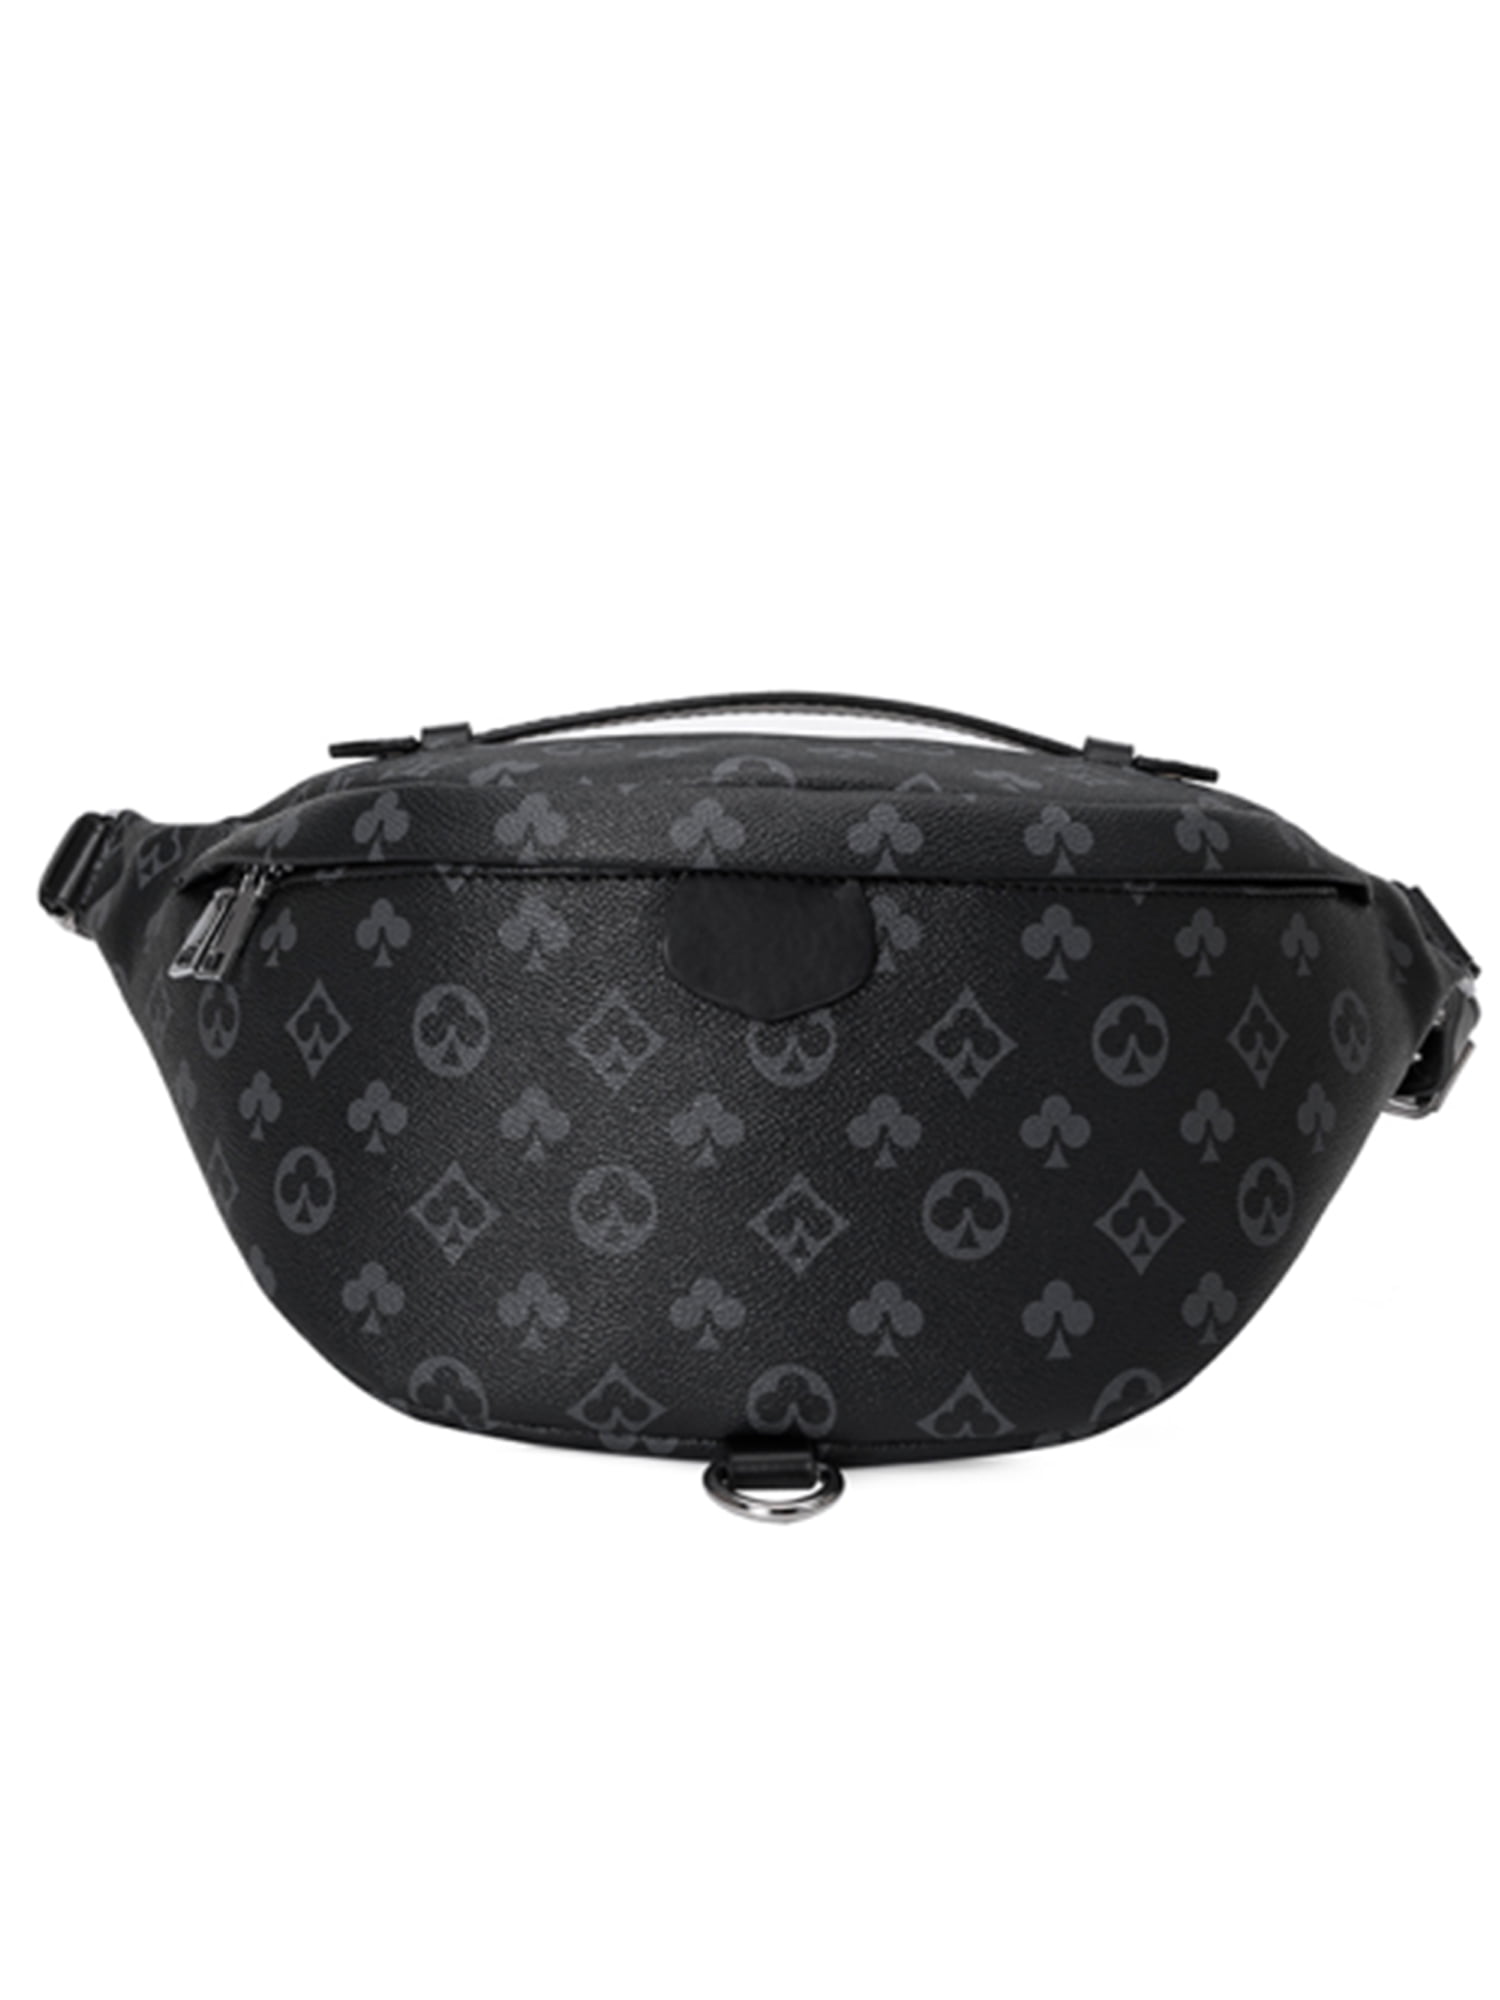 Lumento Checkered Pouch Waist Bag,PU Leather Belt Bags,Woman Man  Pack,Fashion Waist Pack,Travel Bum Bag,Portable Sport Crossbody Satchel Bag  Black Flower 